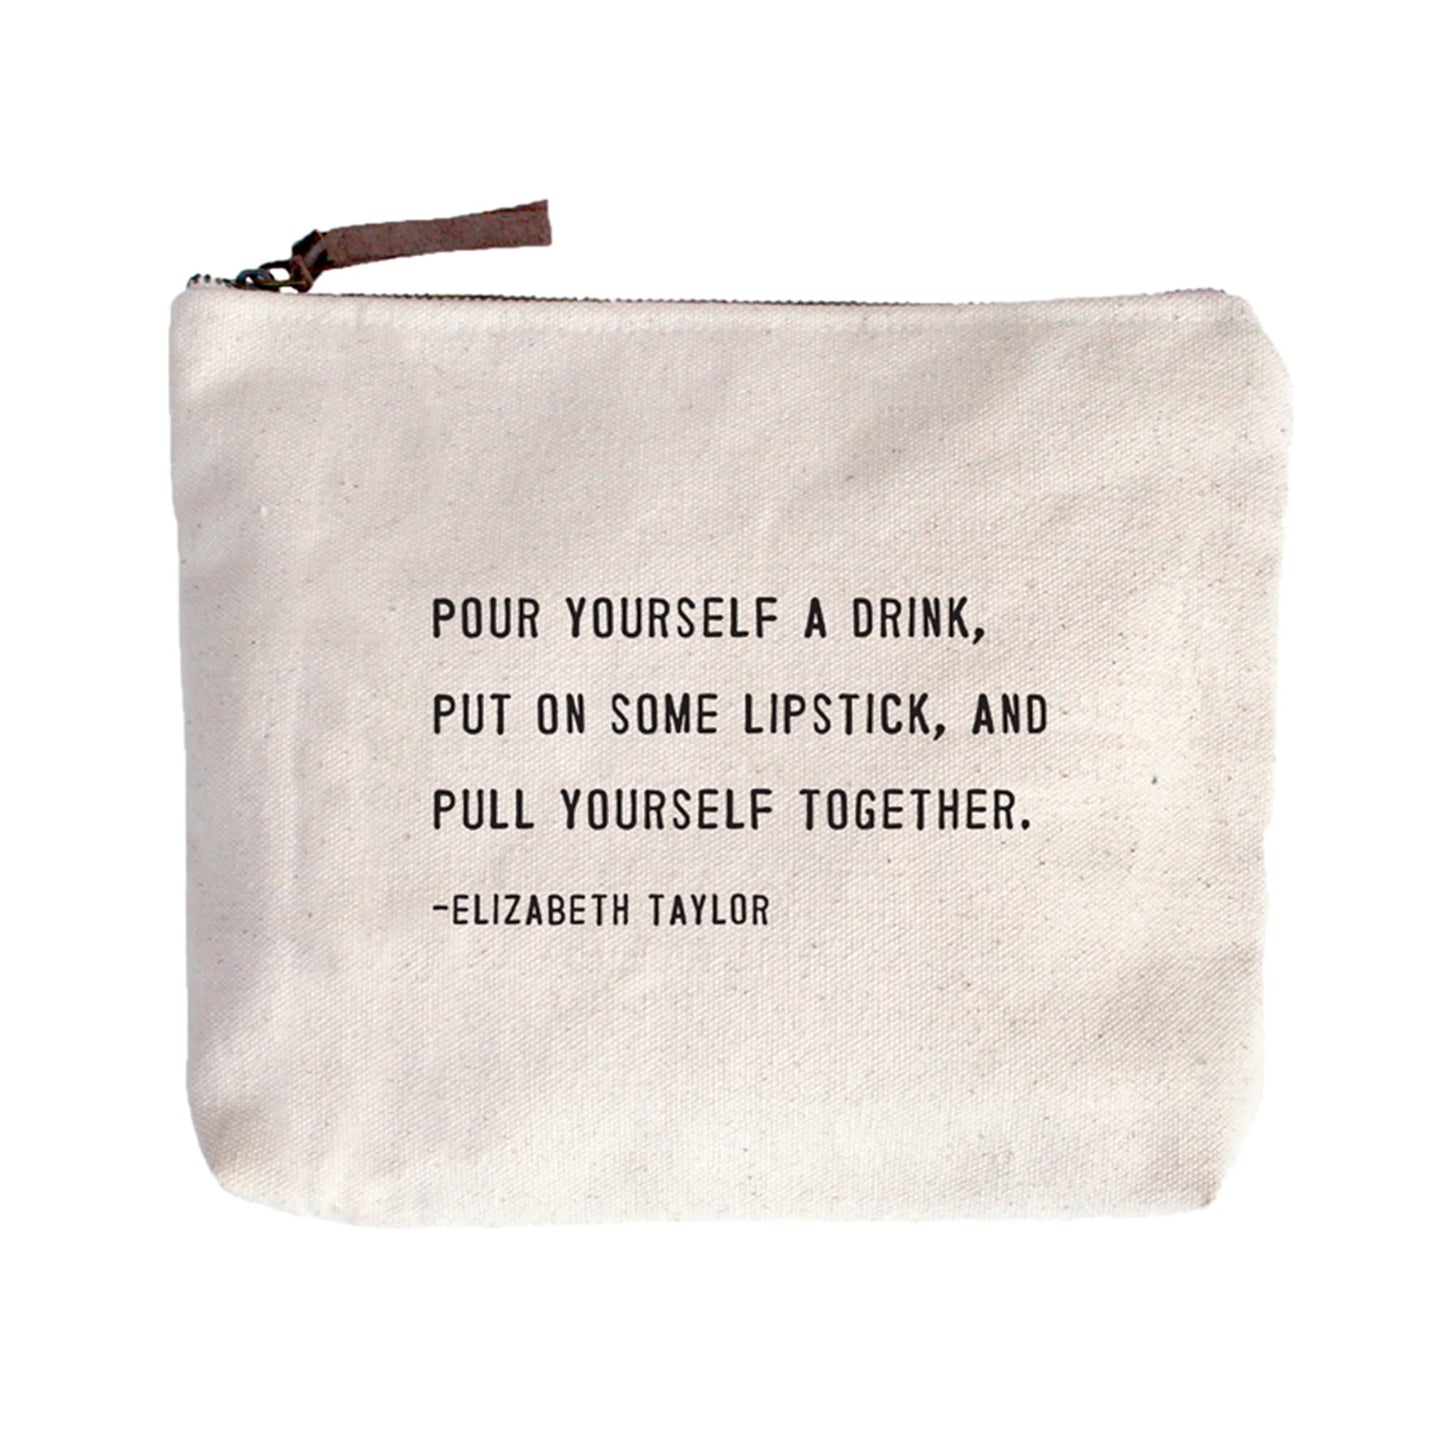 Pour Yourself A Drink Canvas Bag